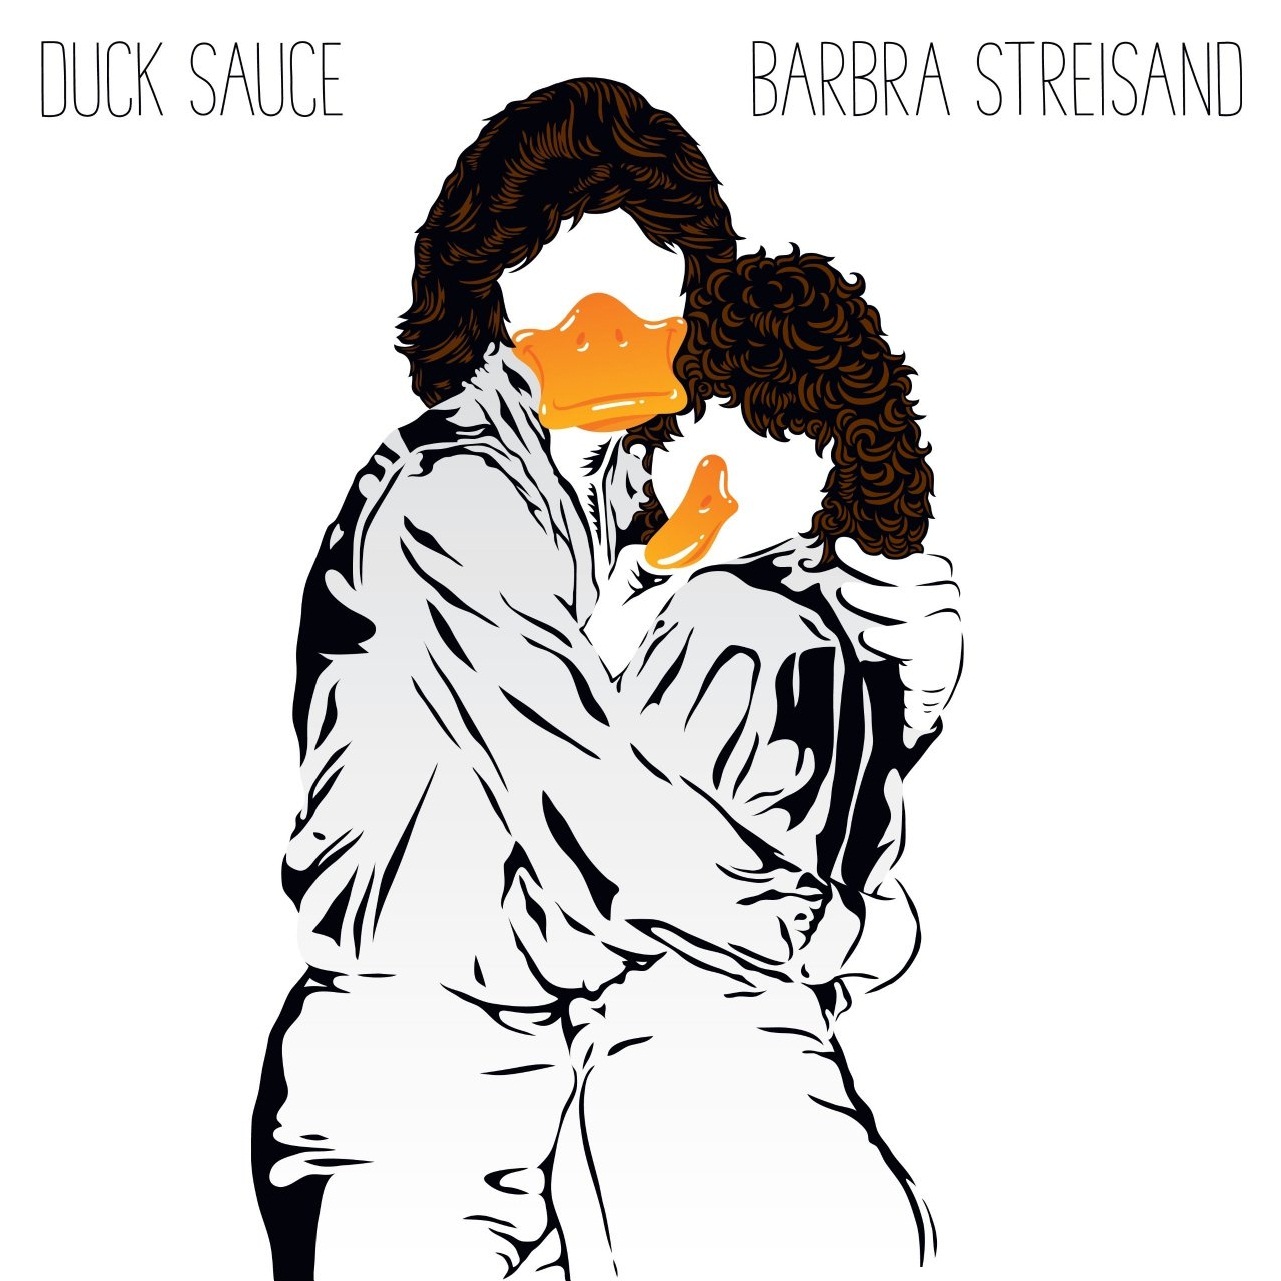 Duck sauce streisand. Duck Sauce - Barbra Streisand (Original Mix). Duck Sauce - Barbara Streisand (Radio Edit). Duck Sauce Barbra Streisand Radio Edit. Duck Sauce Barbra Streisand 2010.